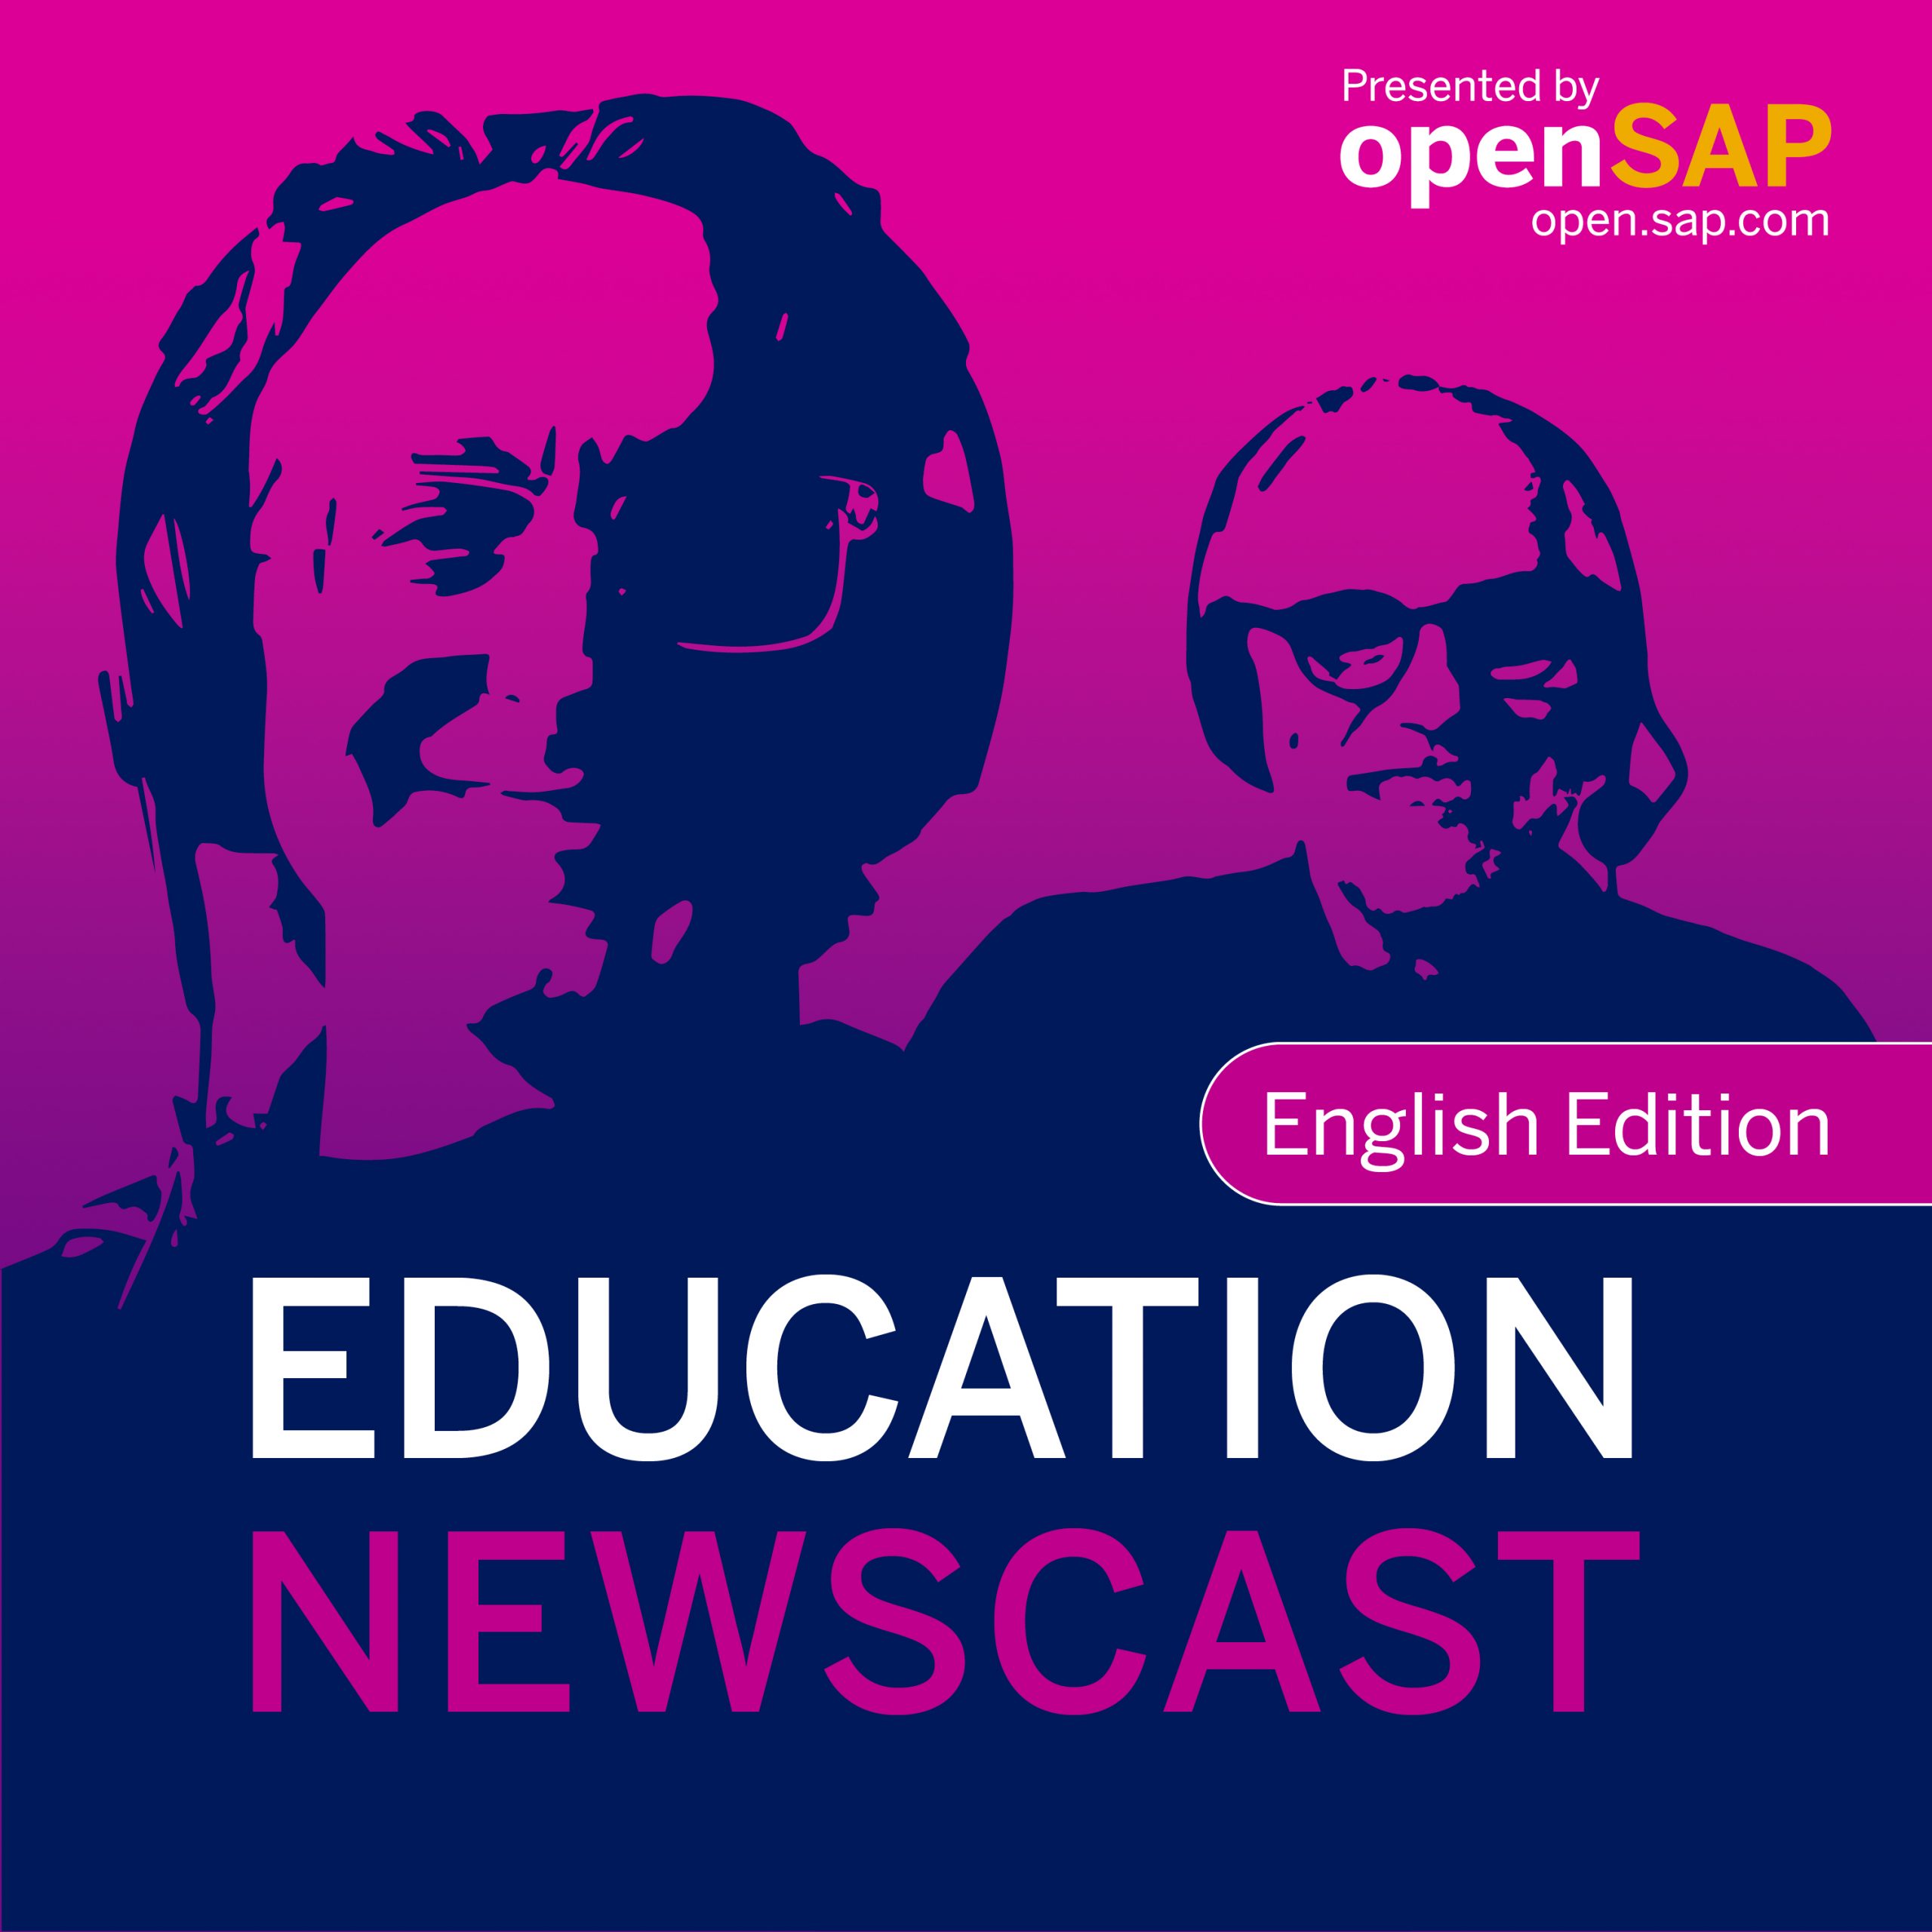 Education NewsCast - English Edition